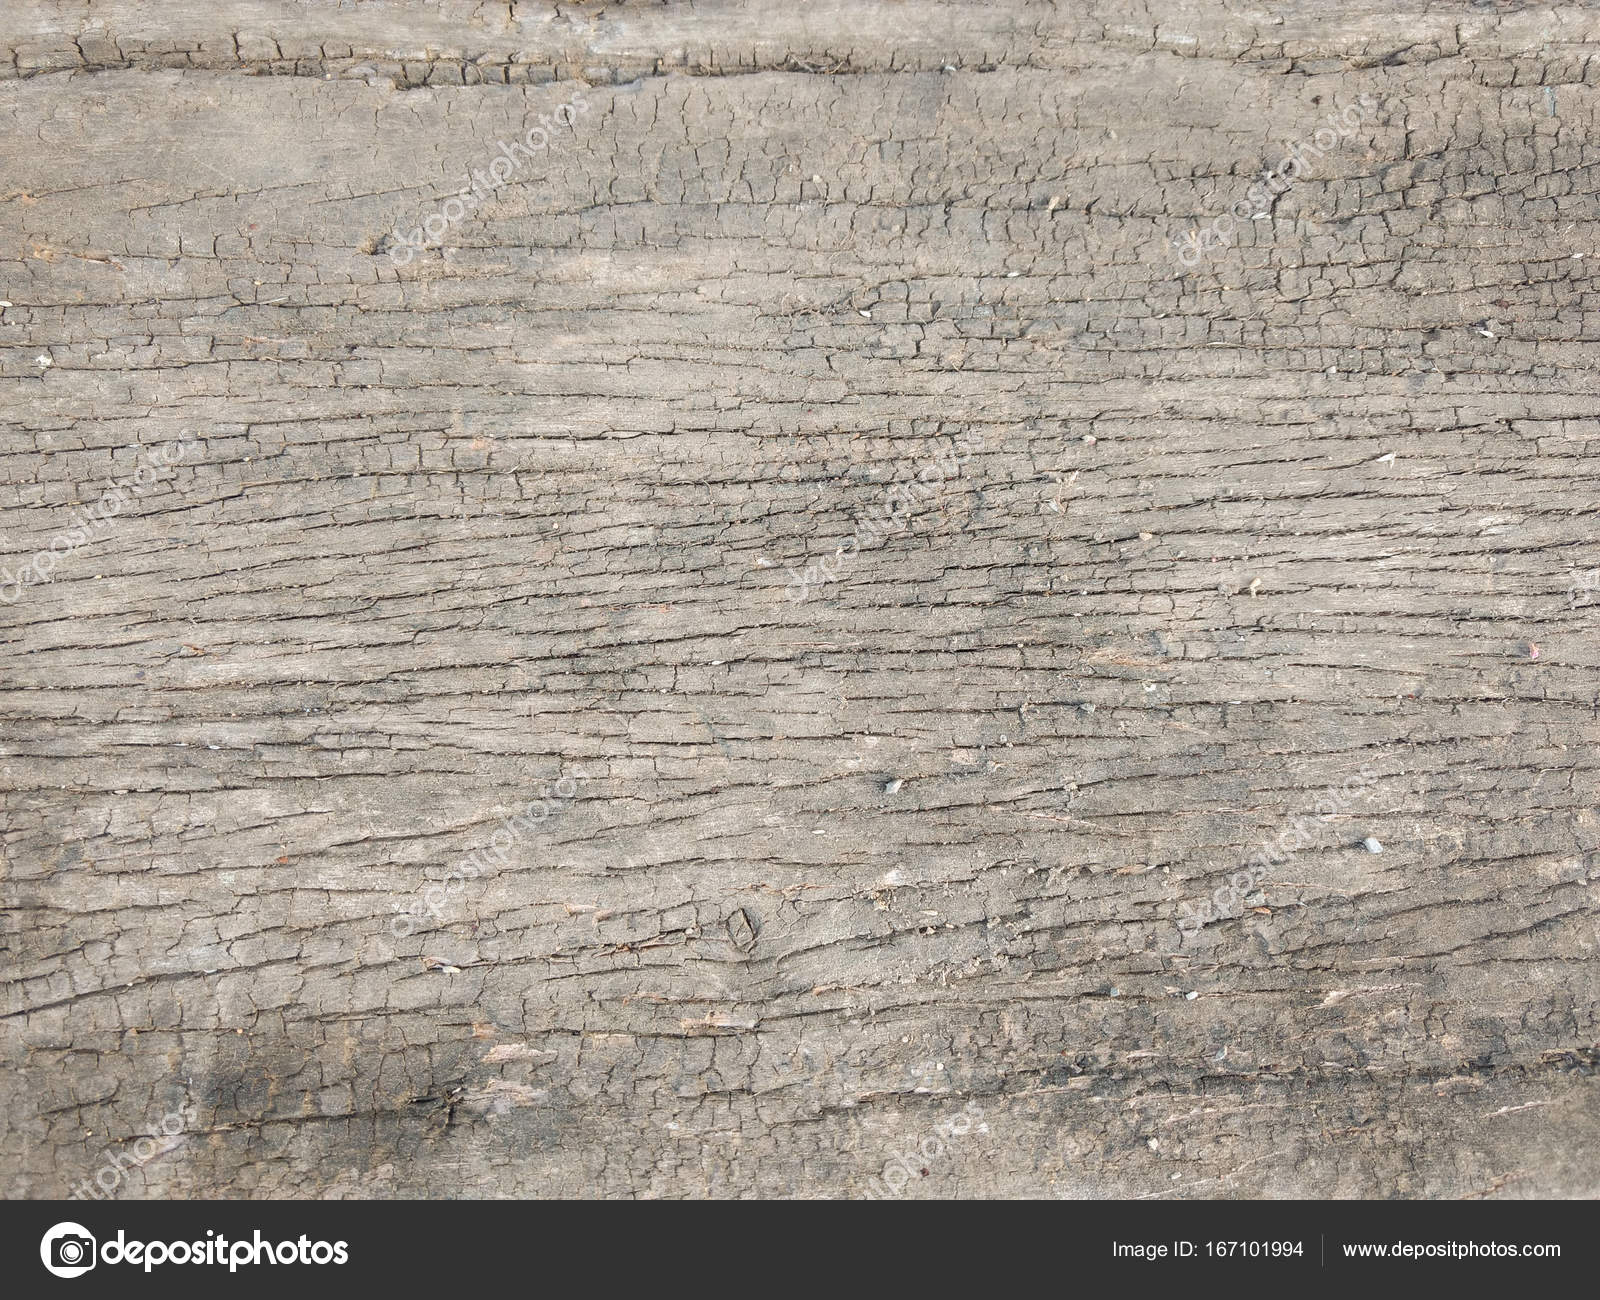 grunge rust wooden texture — Stock Photo © thawornnulove #167101994